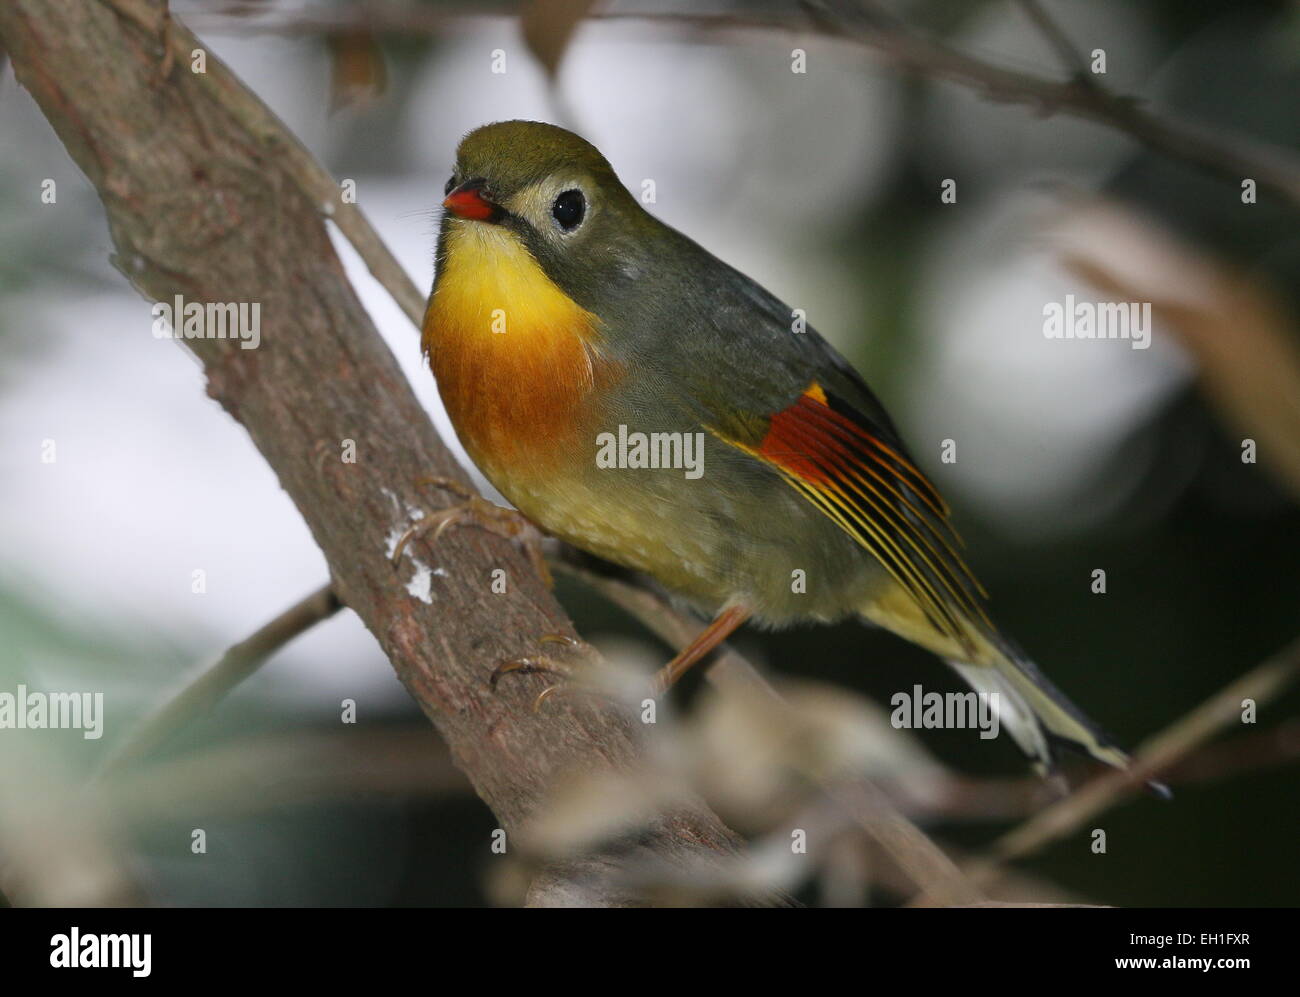 Asian Red-billed Leiothrix ou Pekin Nightingale (Leiothrix lutea). A.k.a. Pekin (Hill) robin ou Japonais rossignol. Banque D'Images